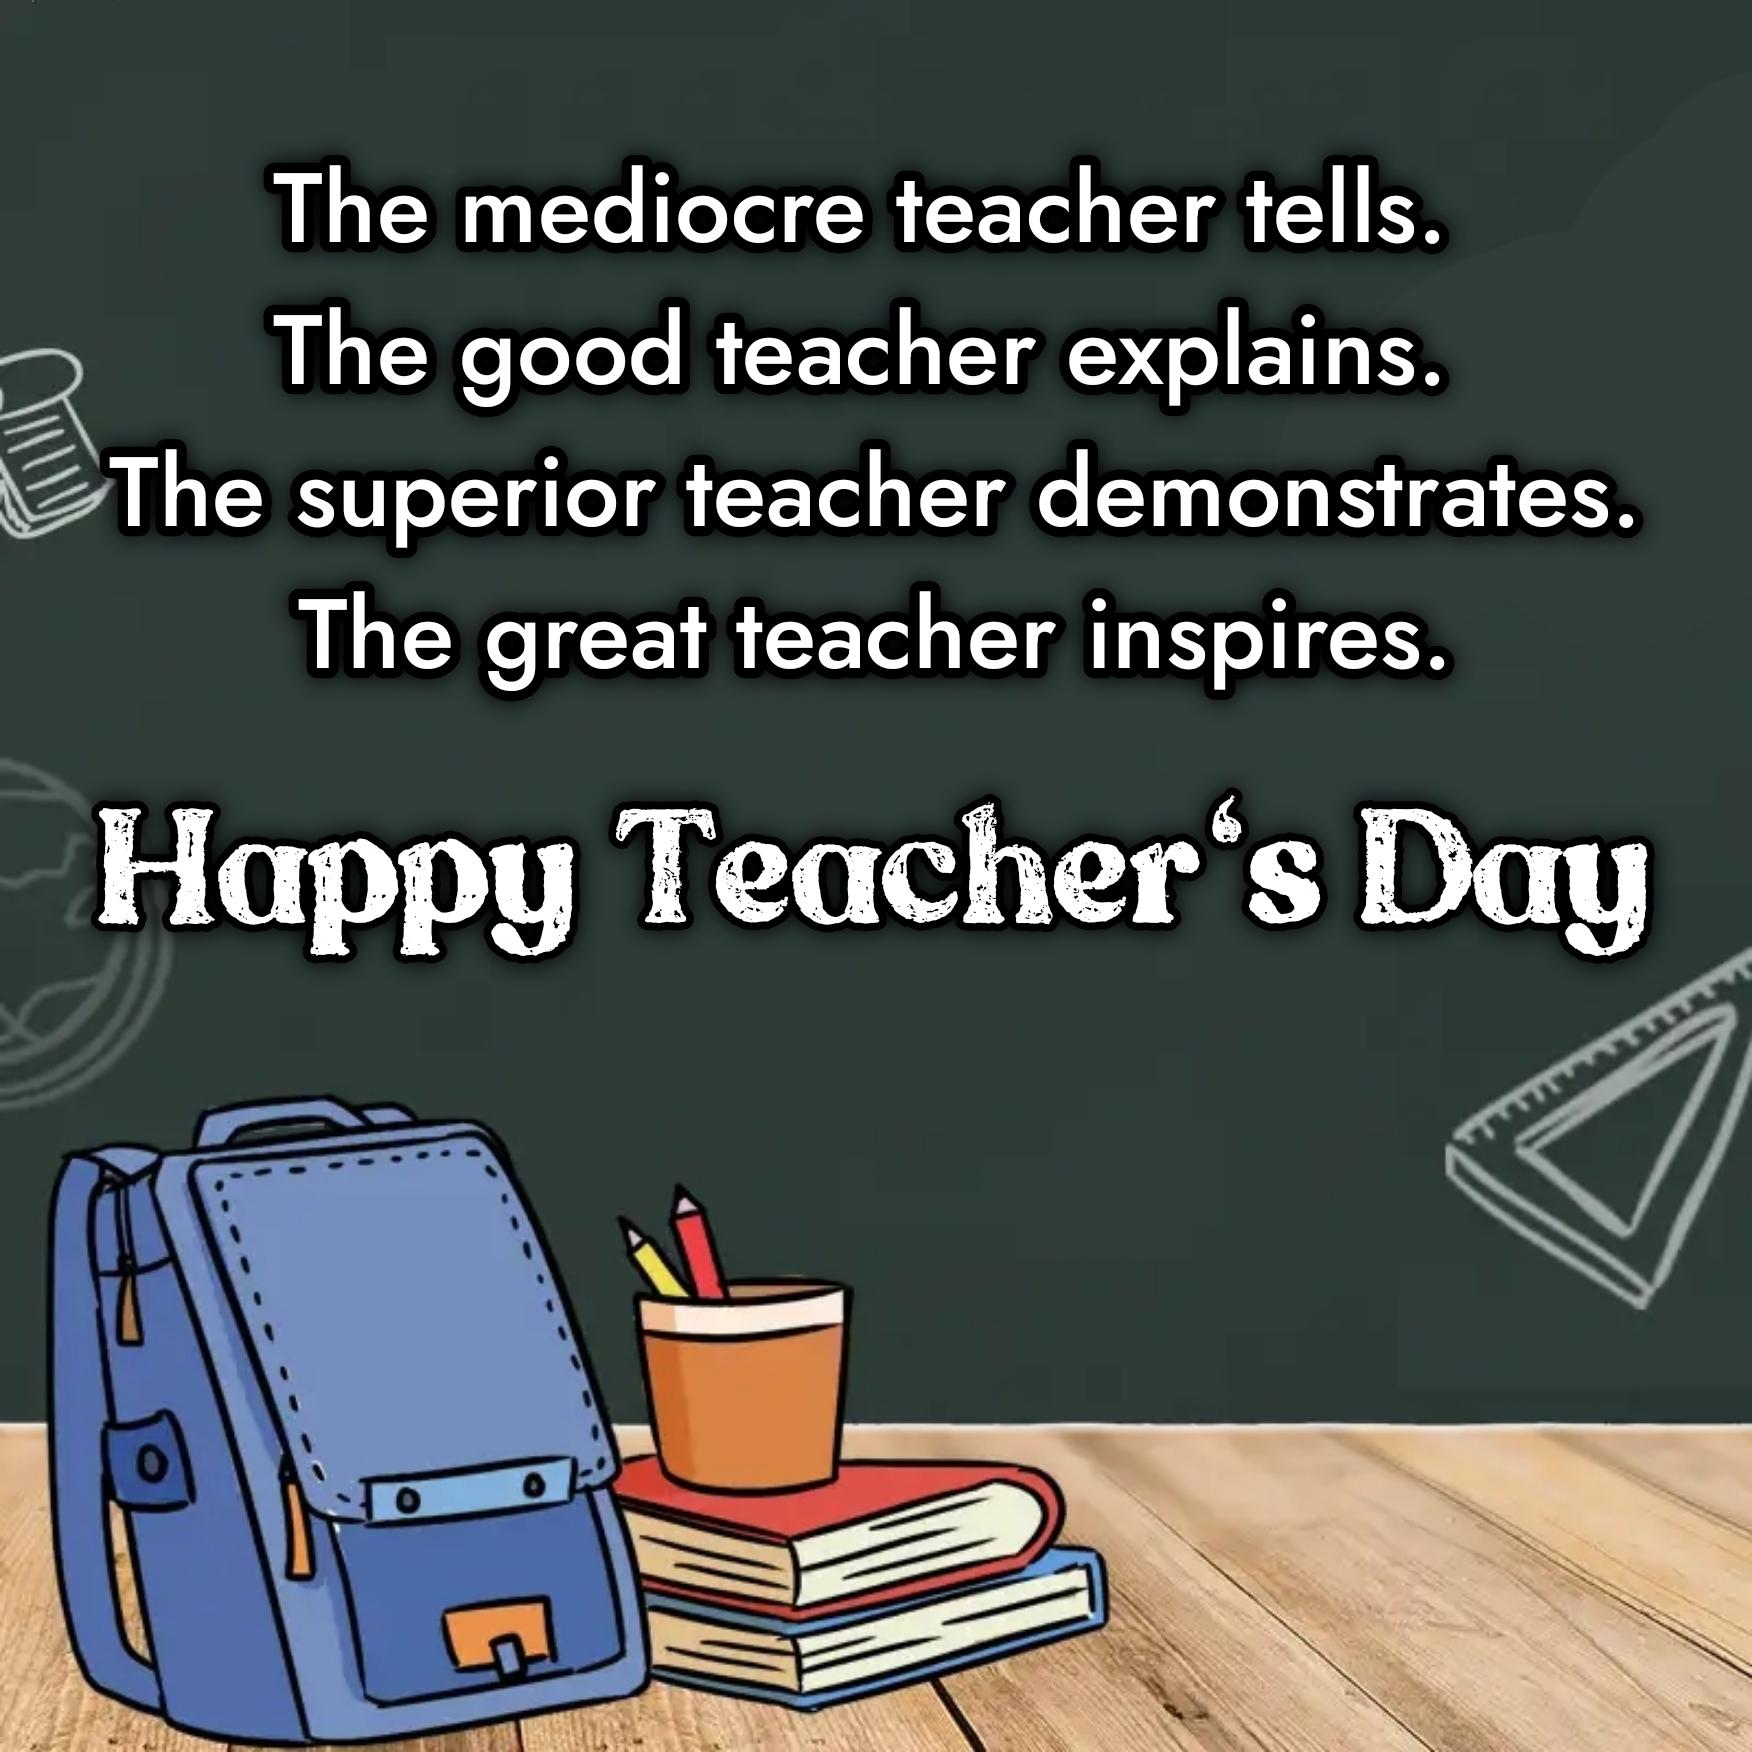 The mediocre teacher tells The good teacher explains